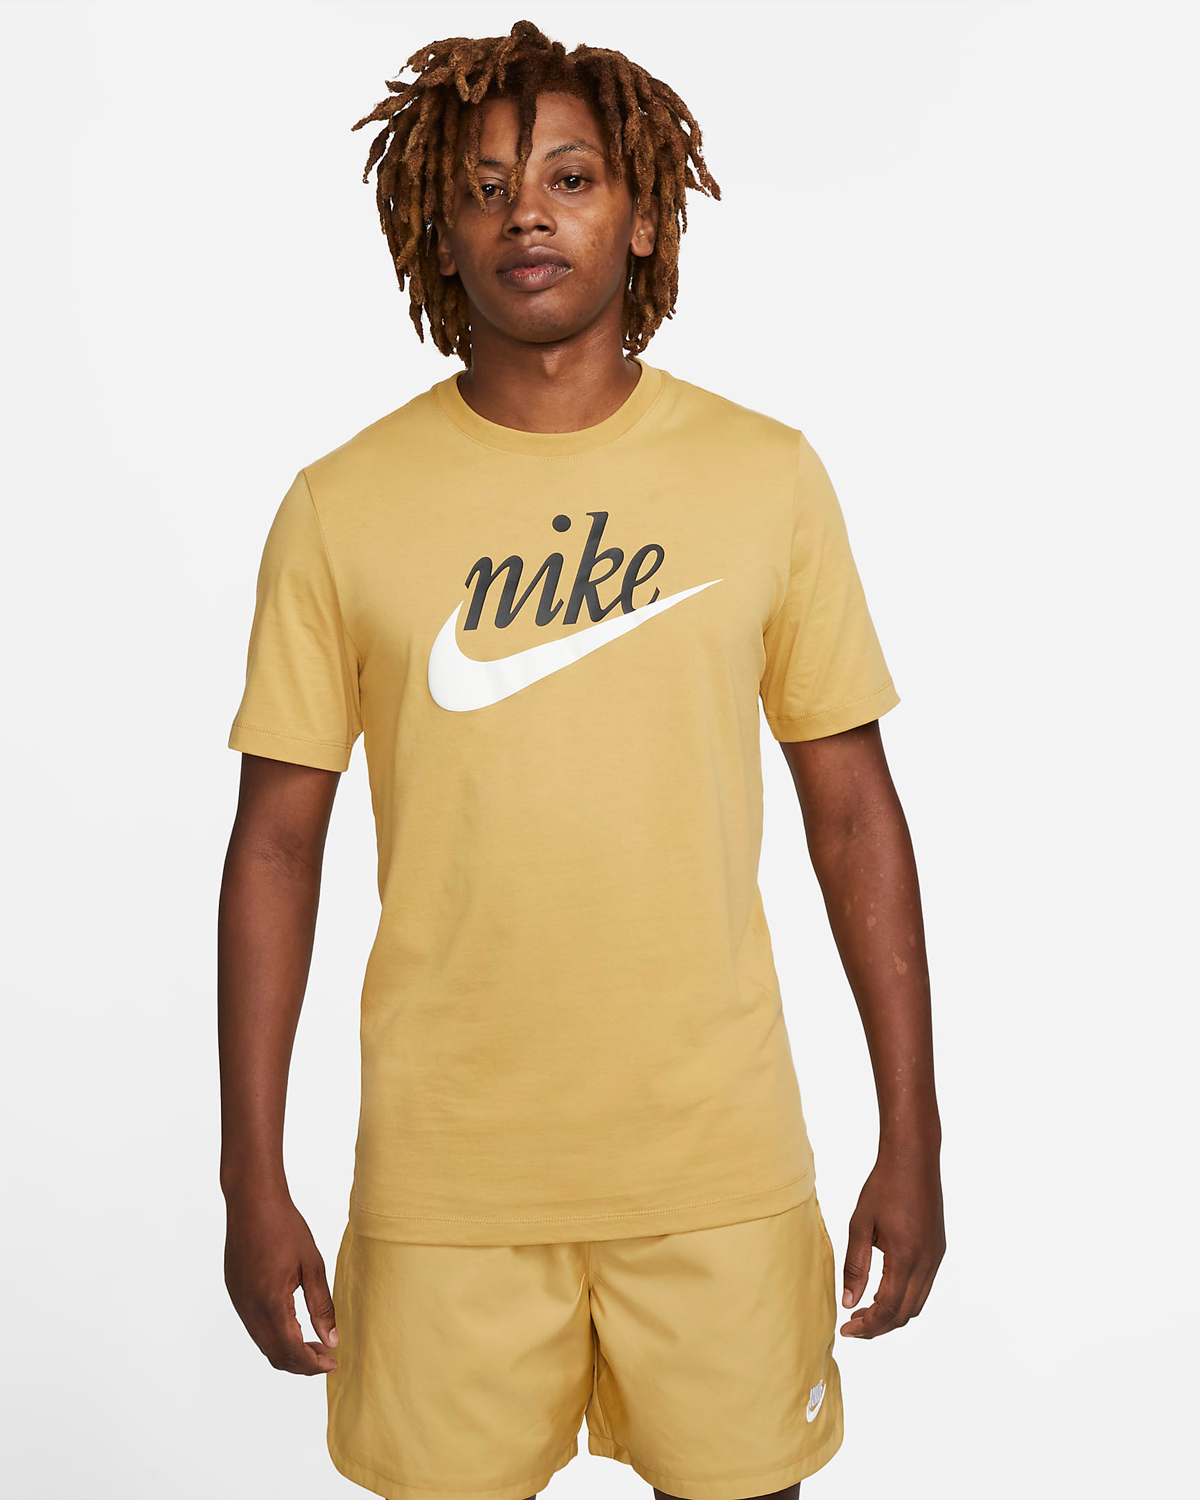 Nike-Sportswear-T-Shirt-Wheat-Gold